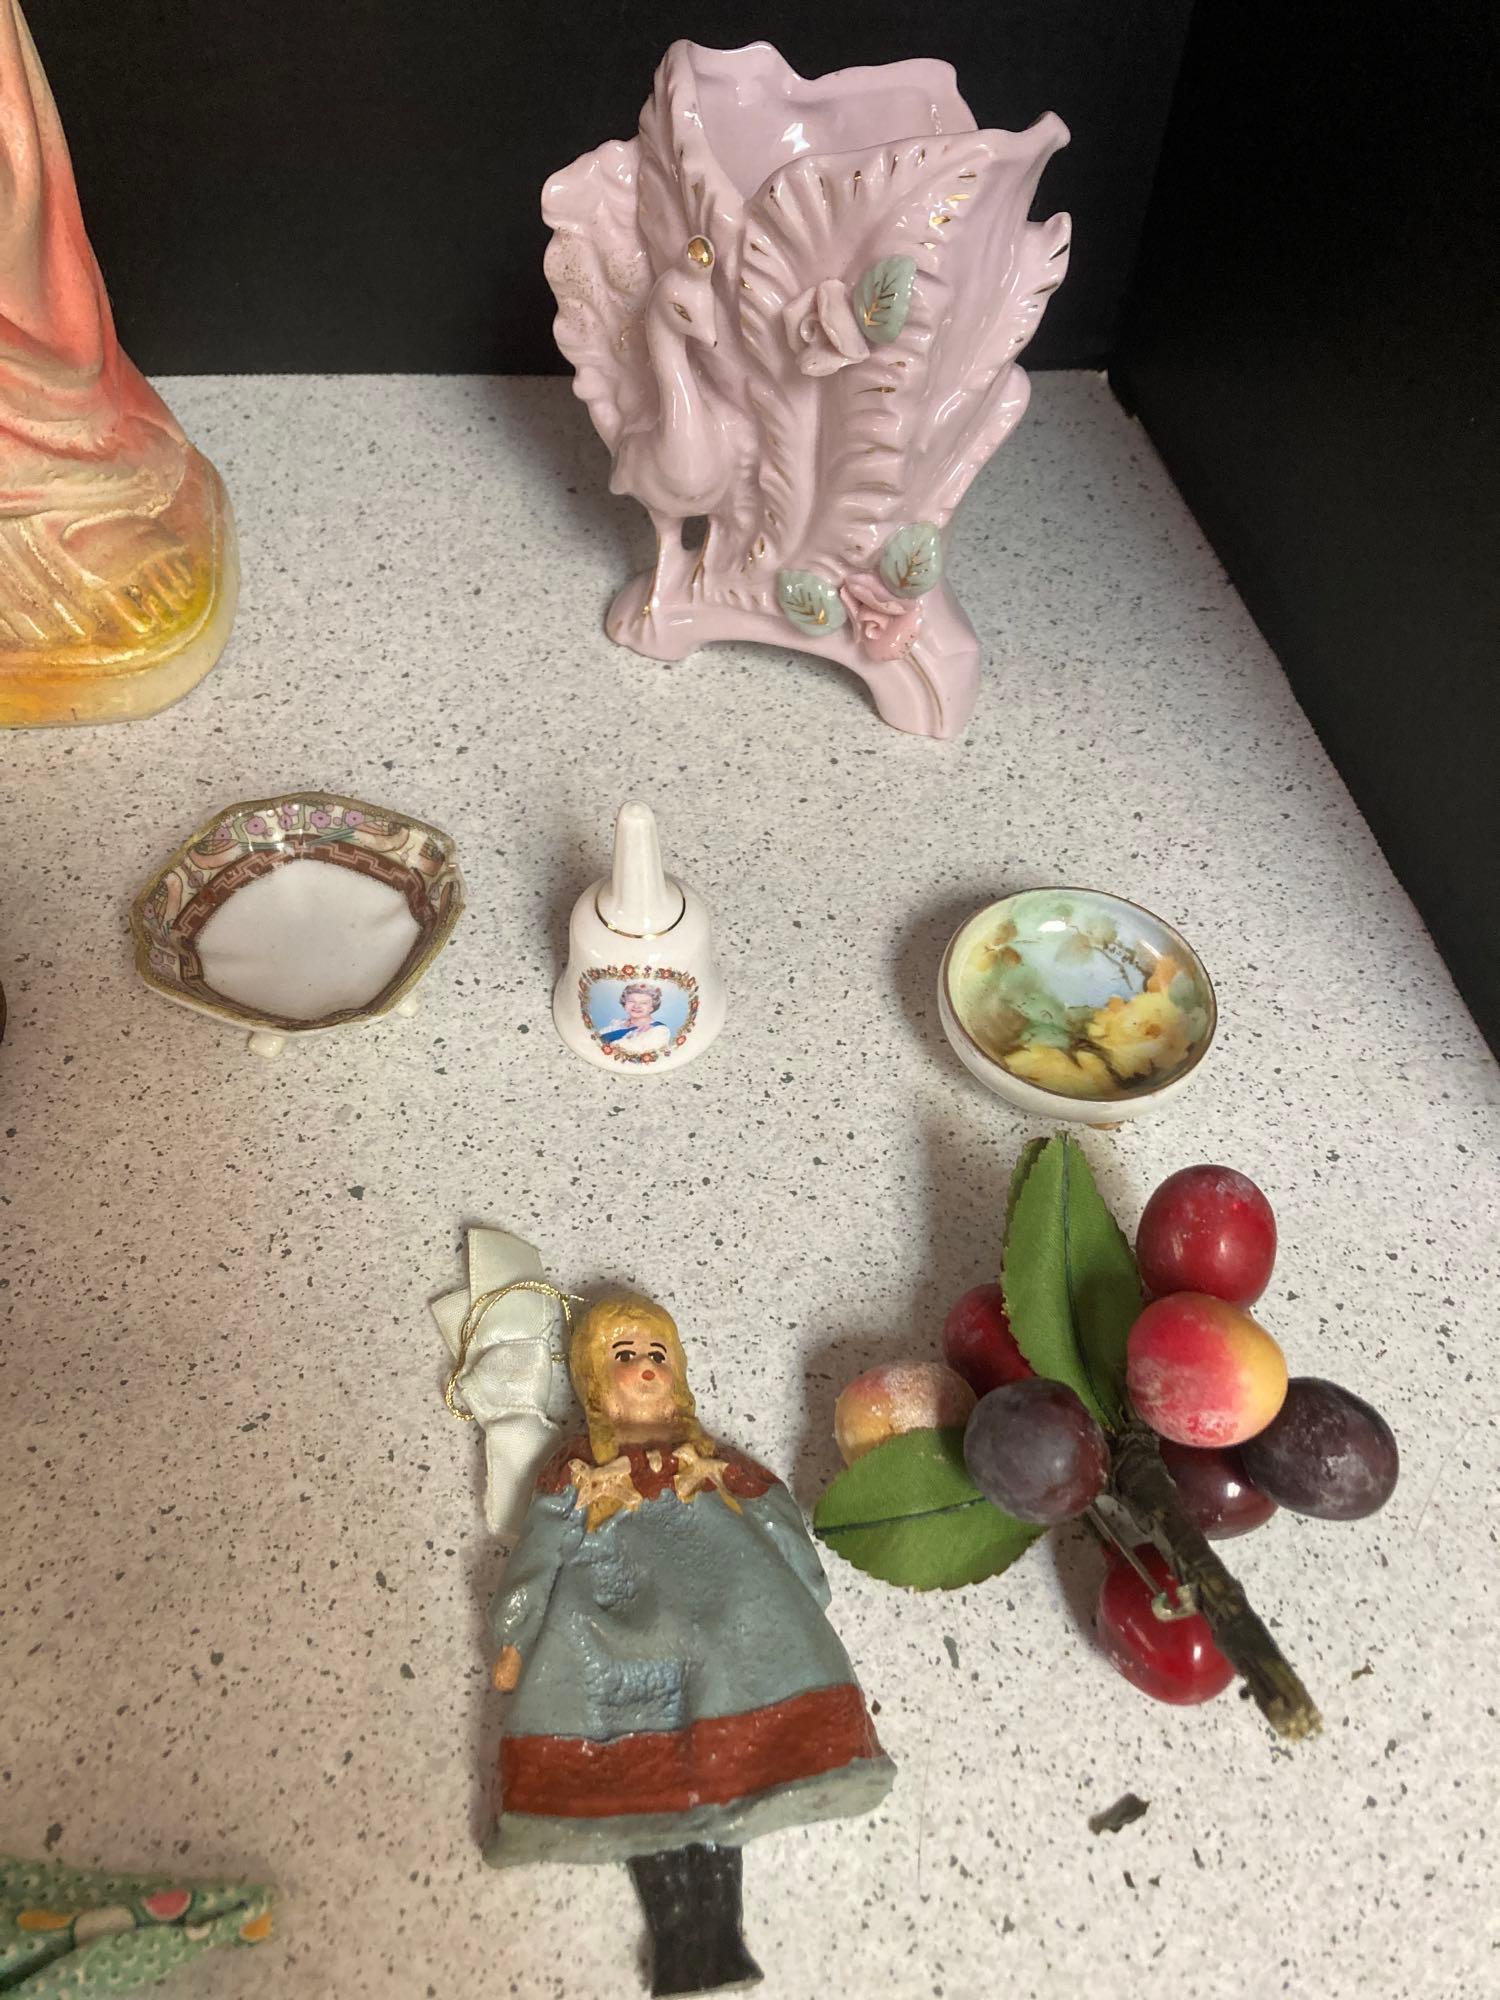 Chalkware religious figure, vintage decor and items